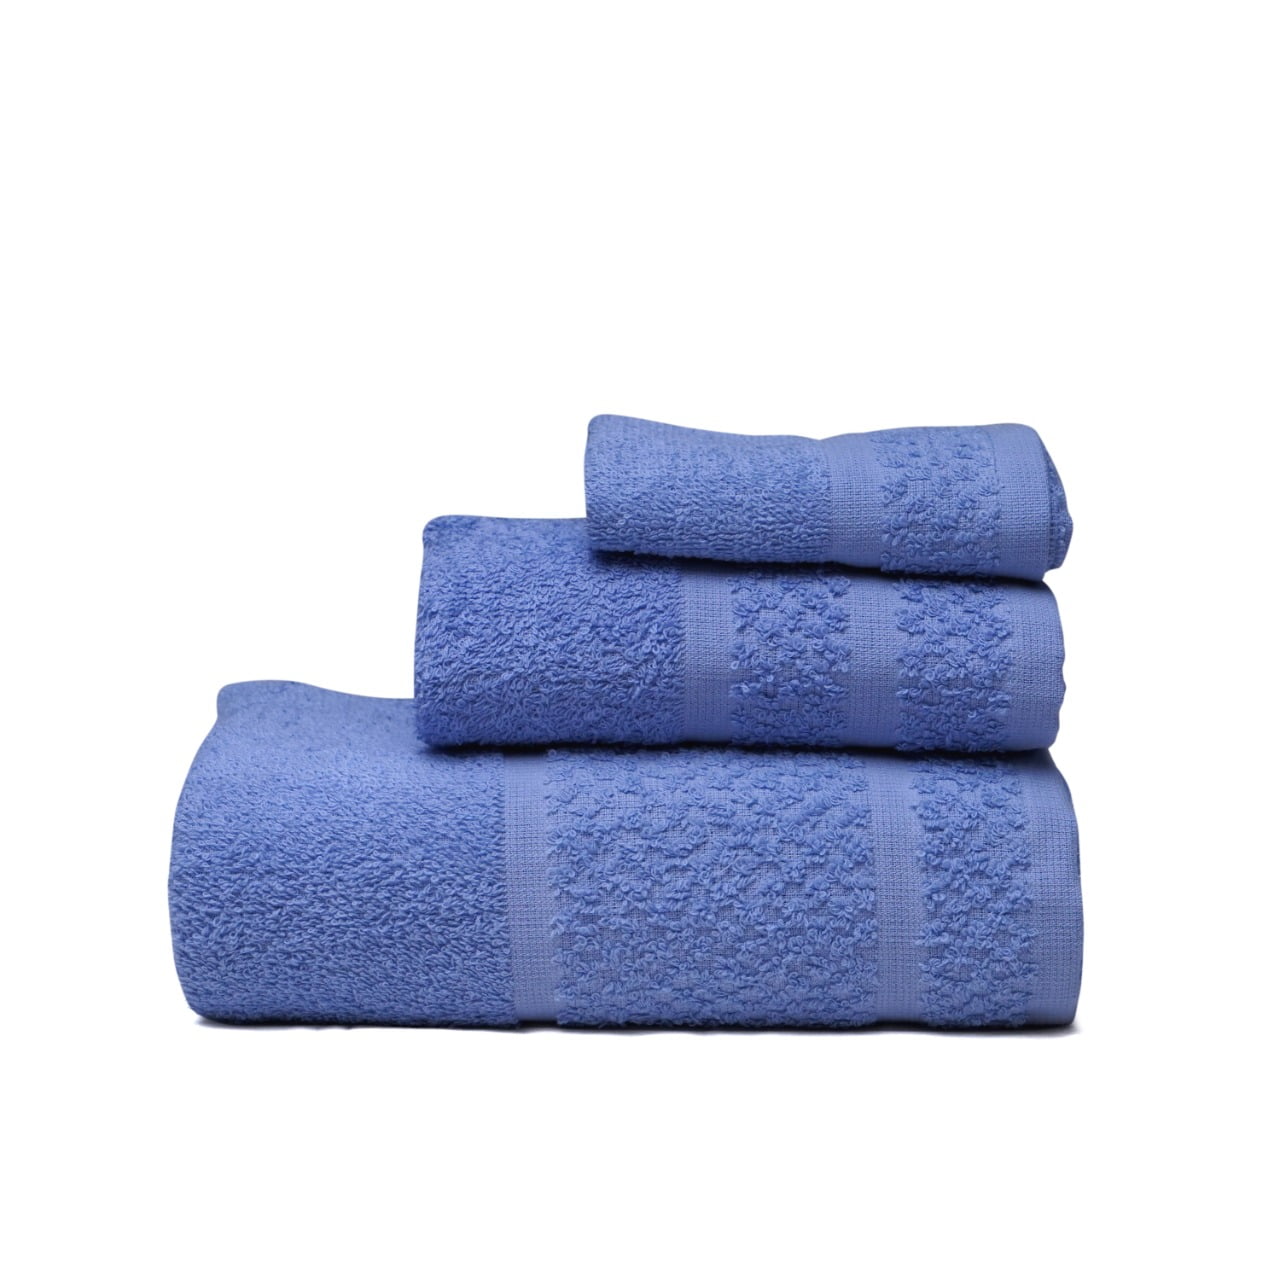 Mainstays Value Bath Towel, Office Blue